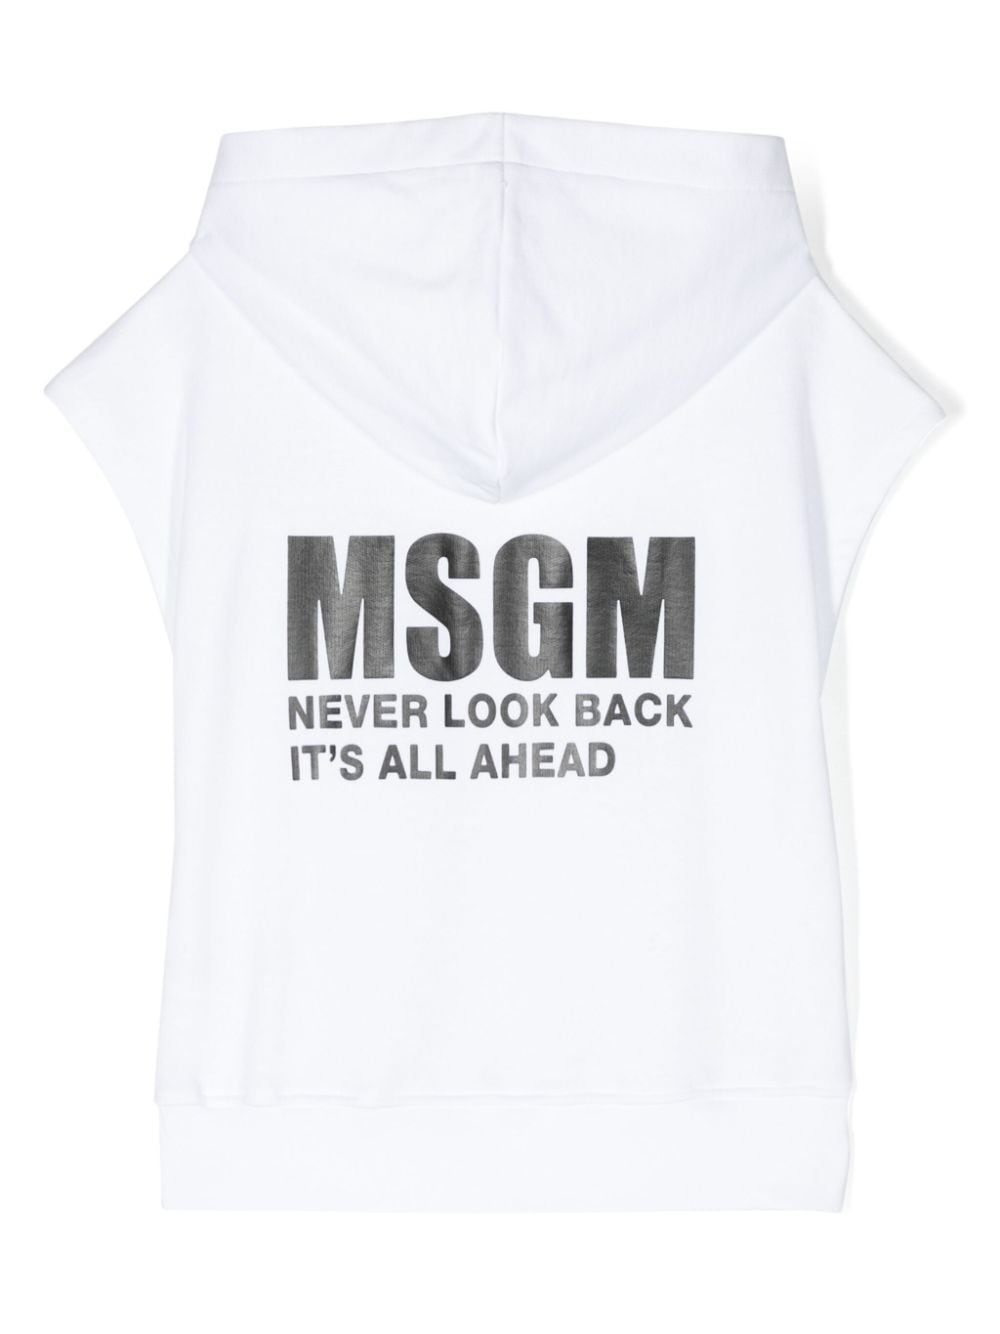 White sweatshirt for girls with logo